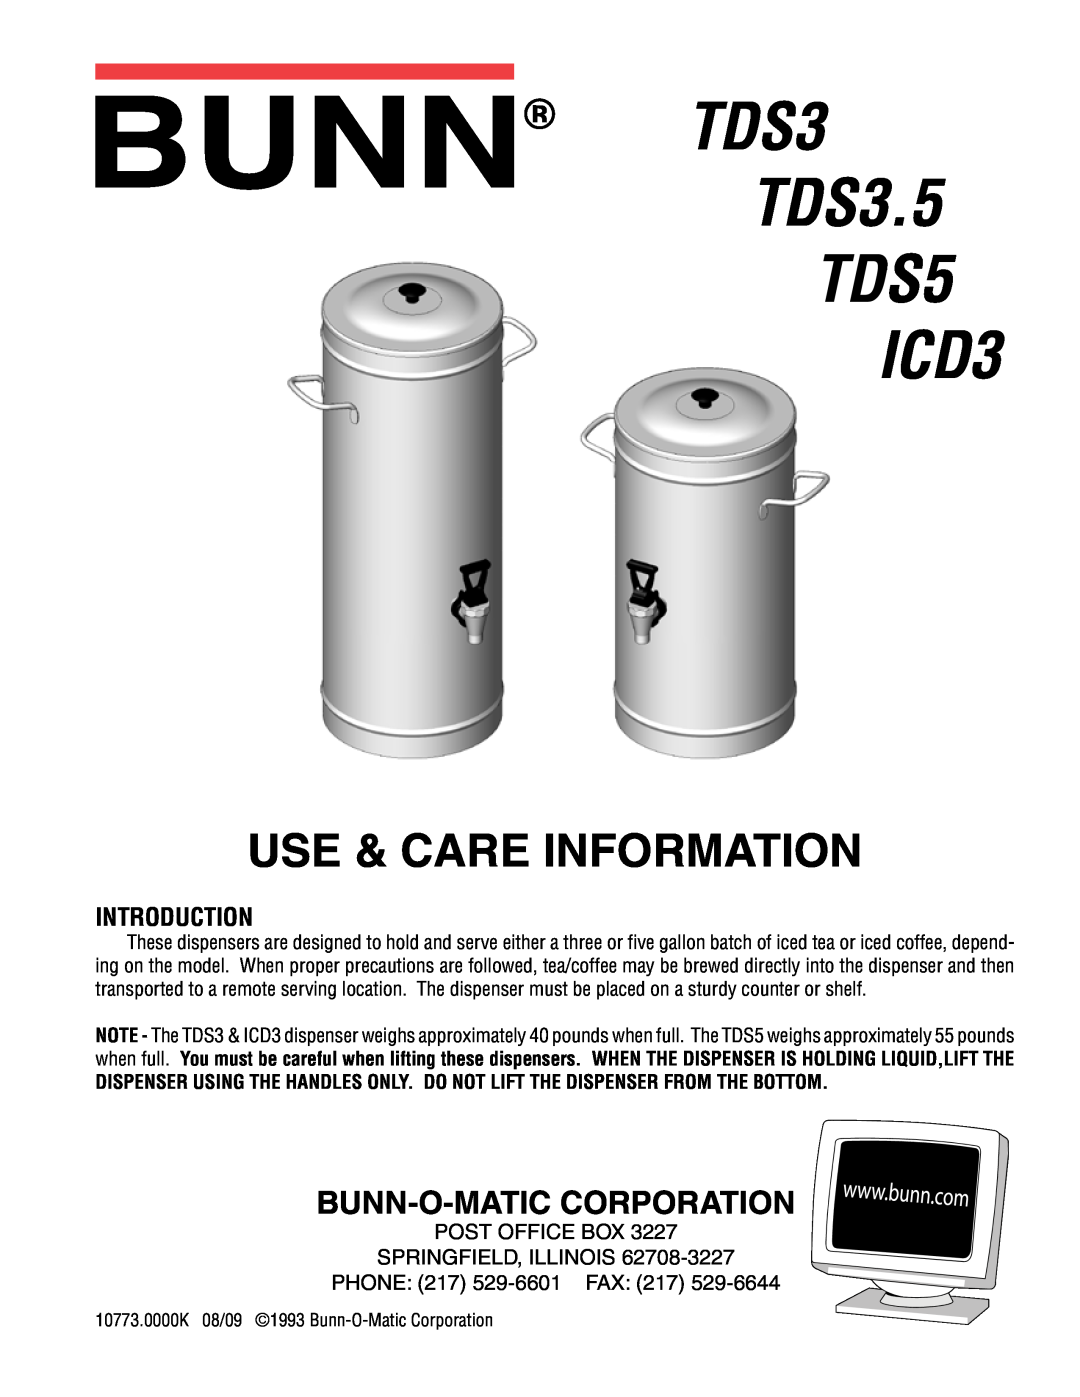 Bunn manual Introduction, TDS3 TDS3.5 TDS5 ICD3, Use & Care Information, Bunn-O-Matic Corporation 